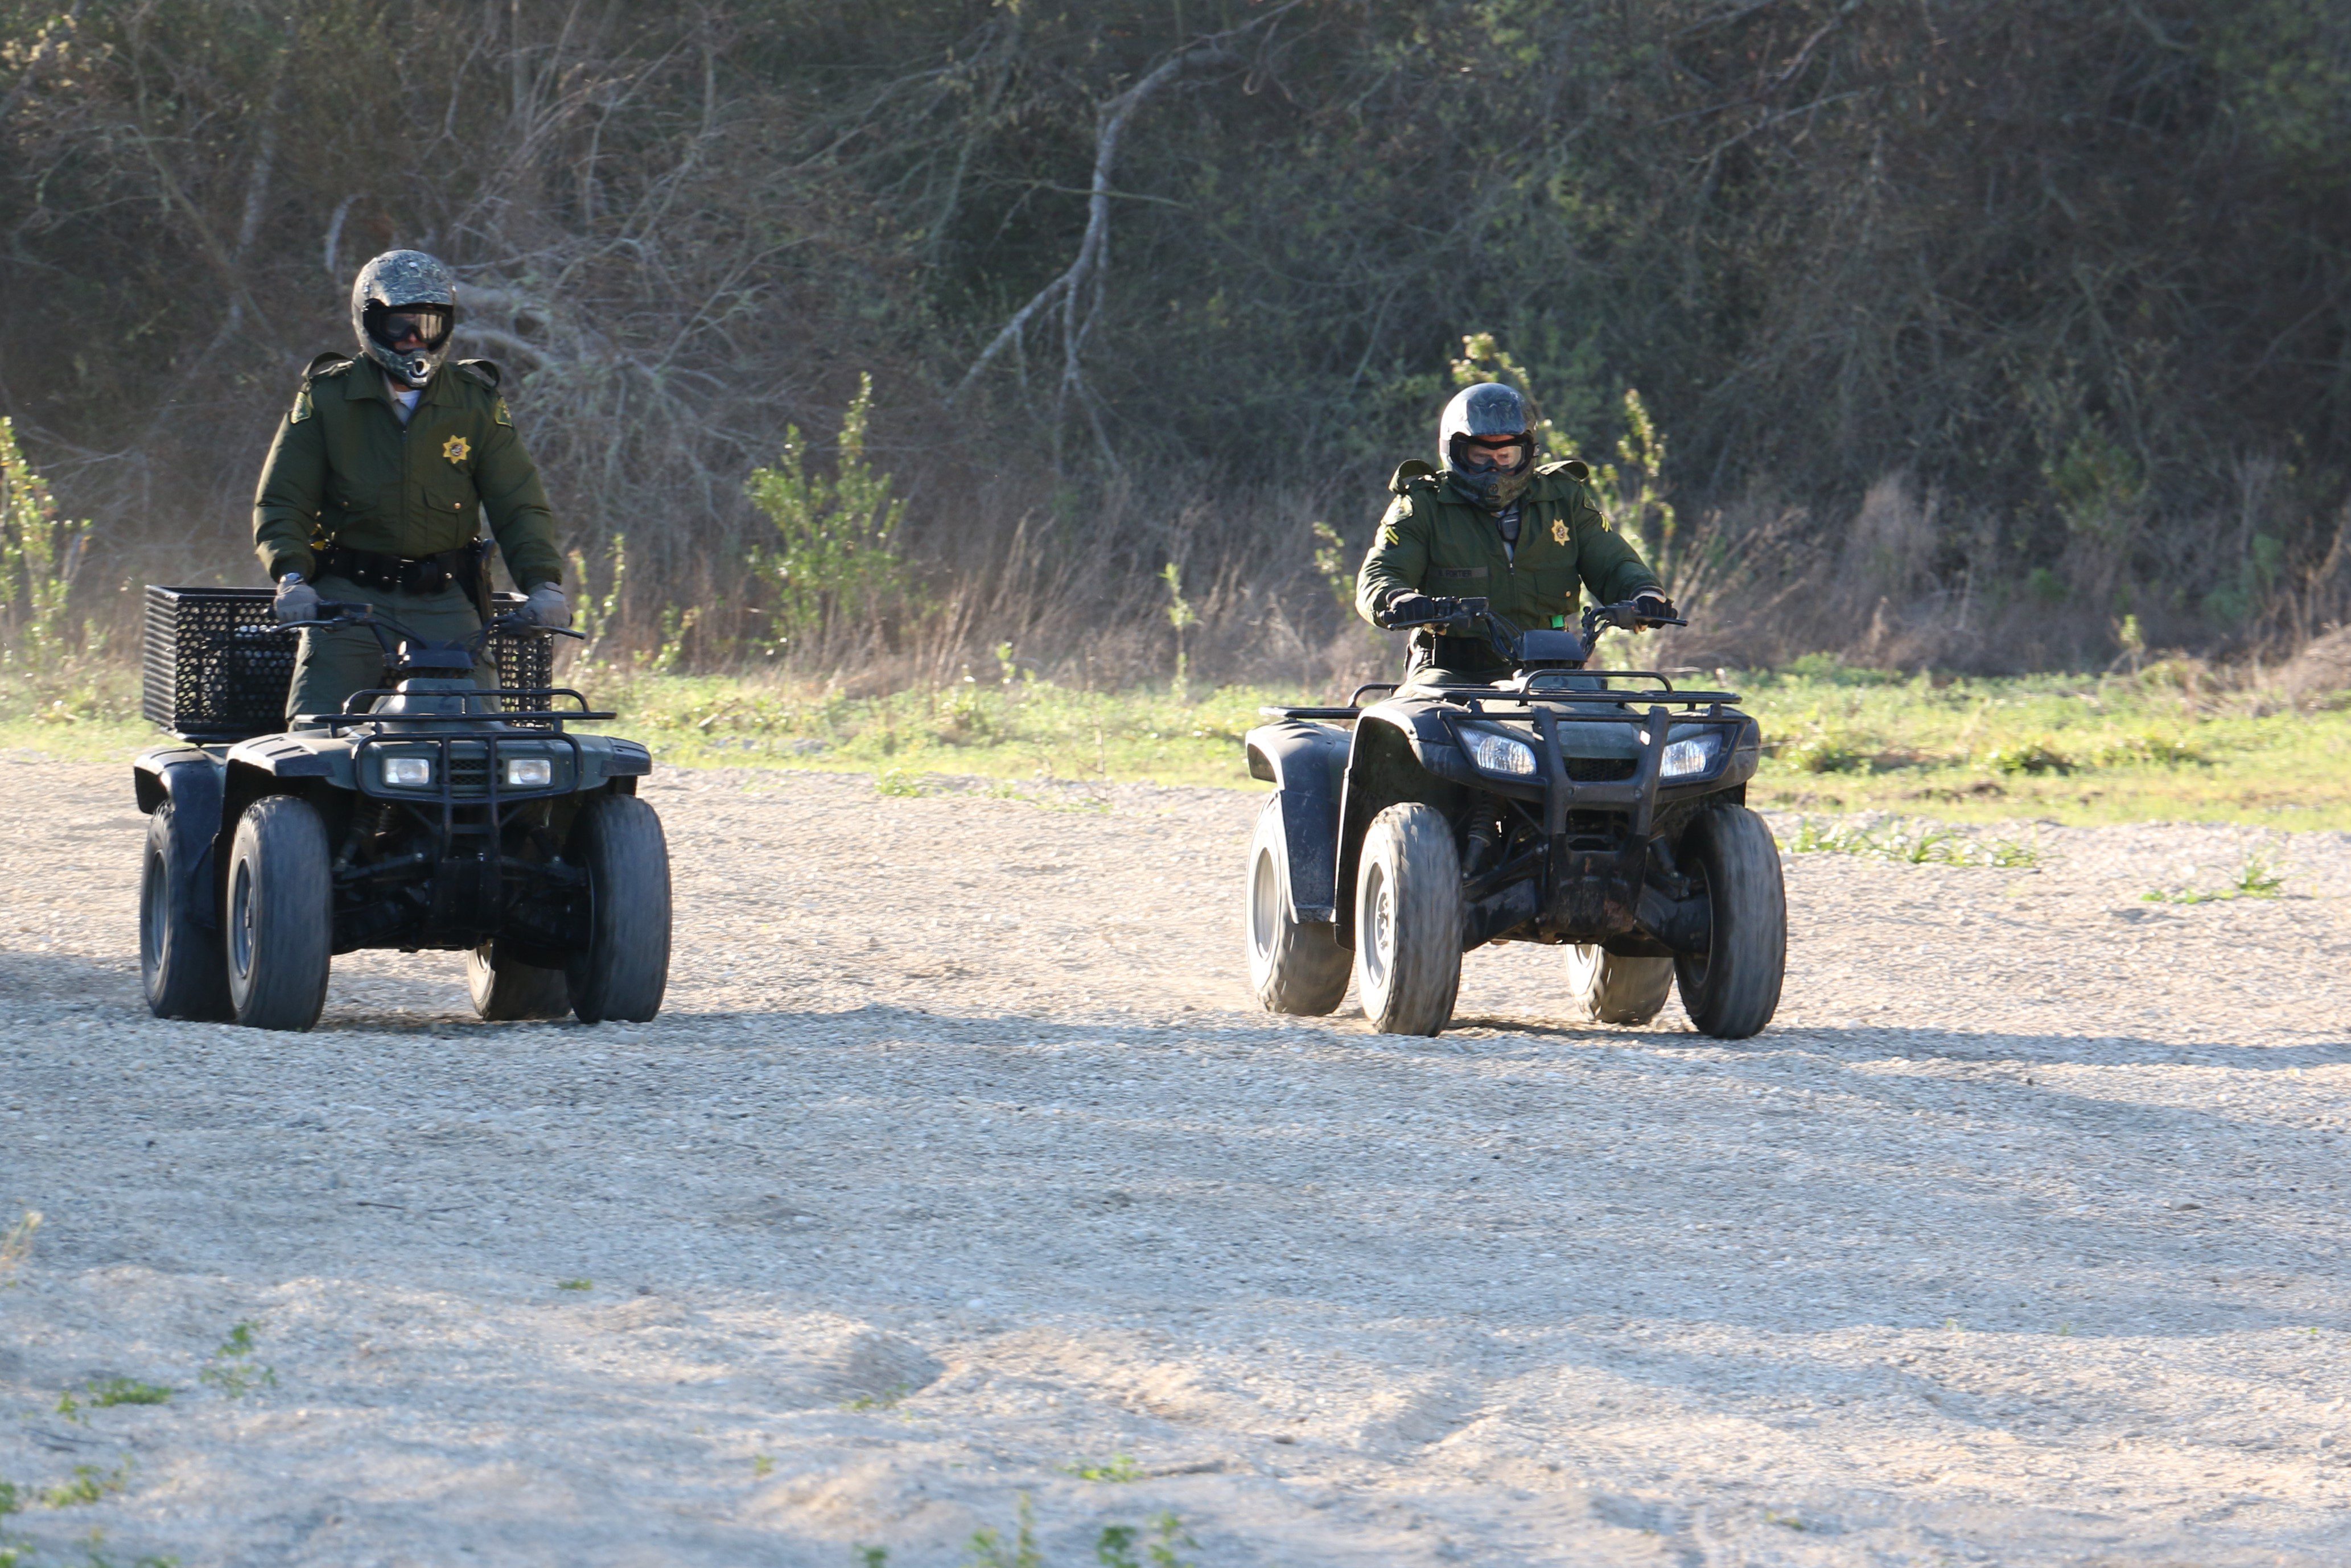 Sheriff’s Office seeks grant for ATV riverbed patrols